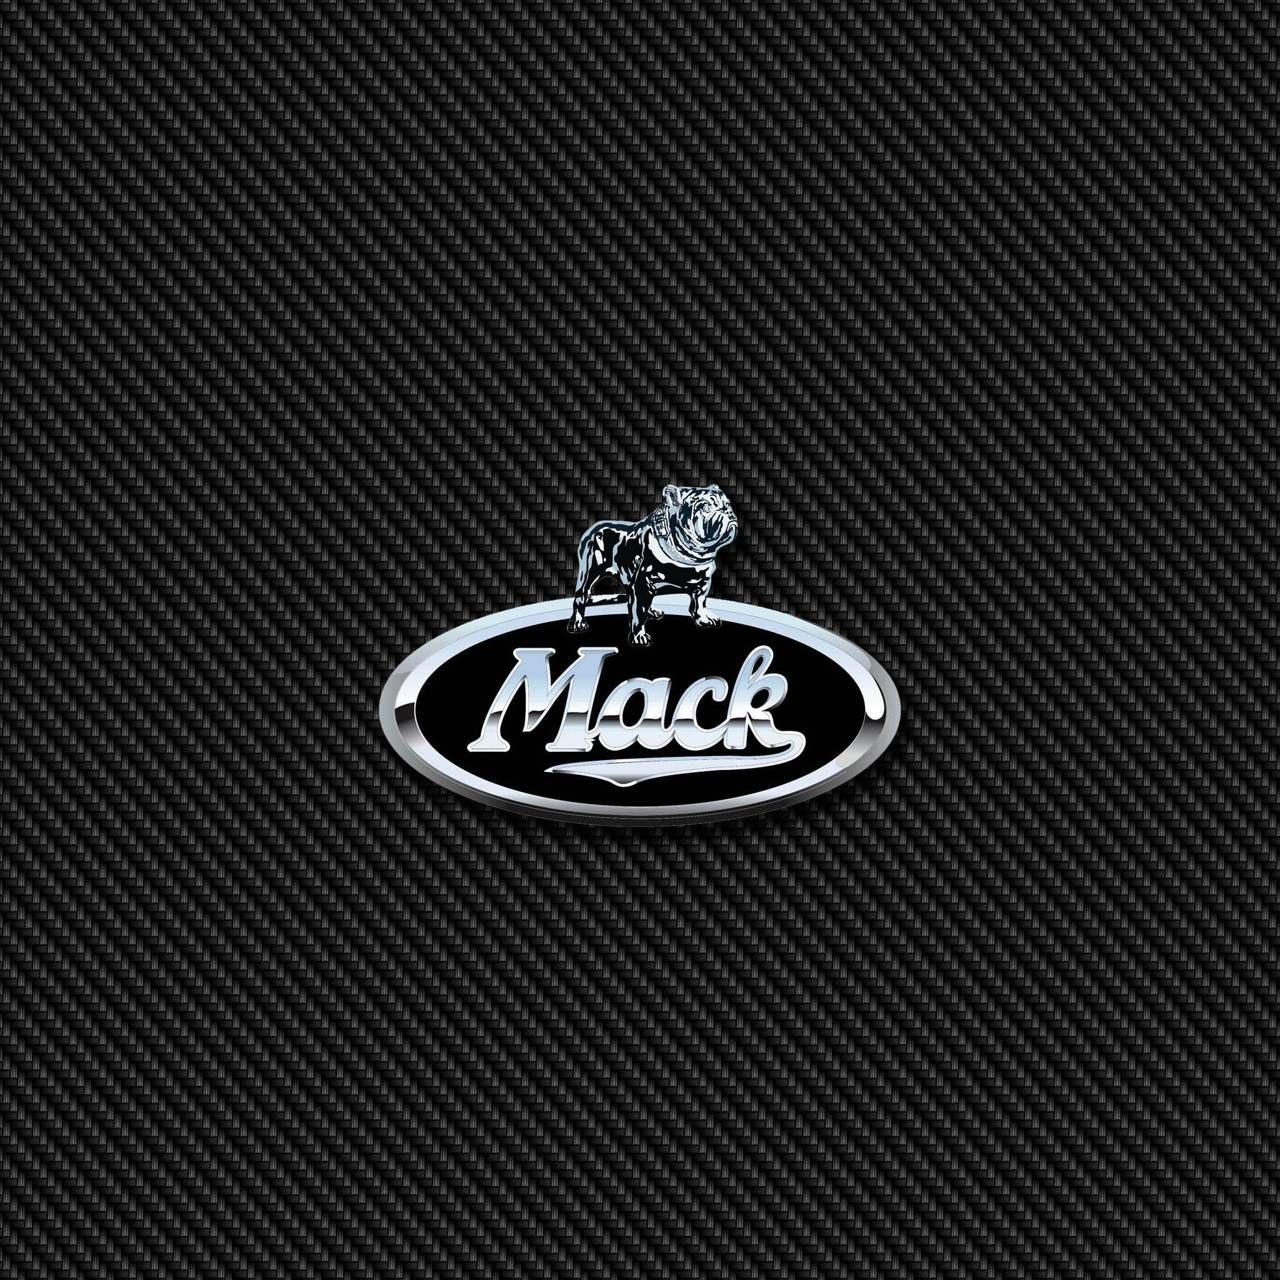 Download Mack Carbon Wallpaper